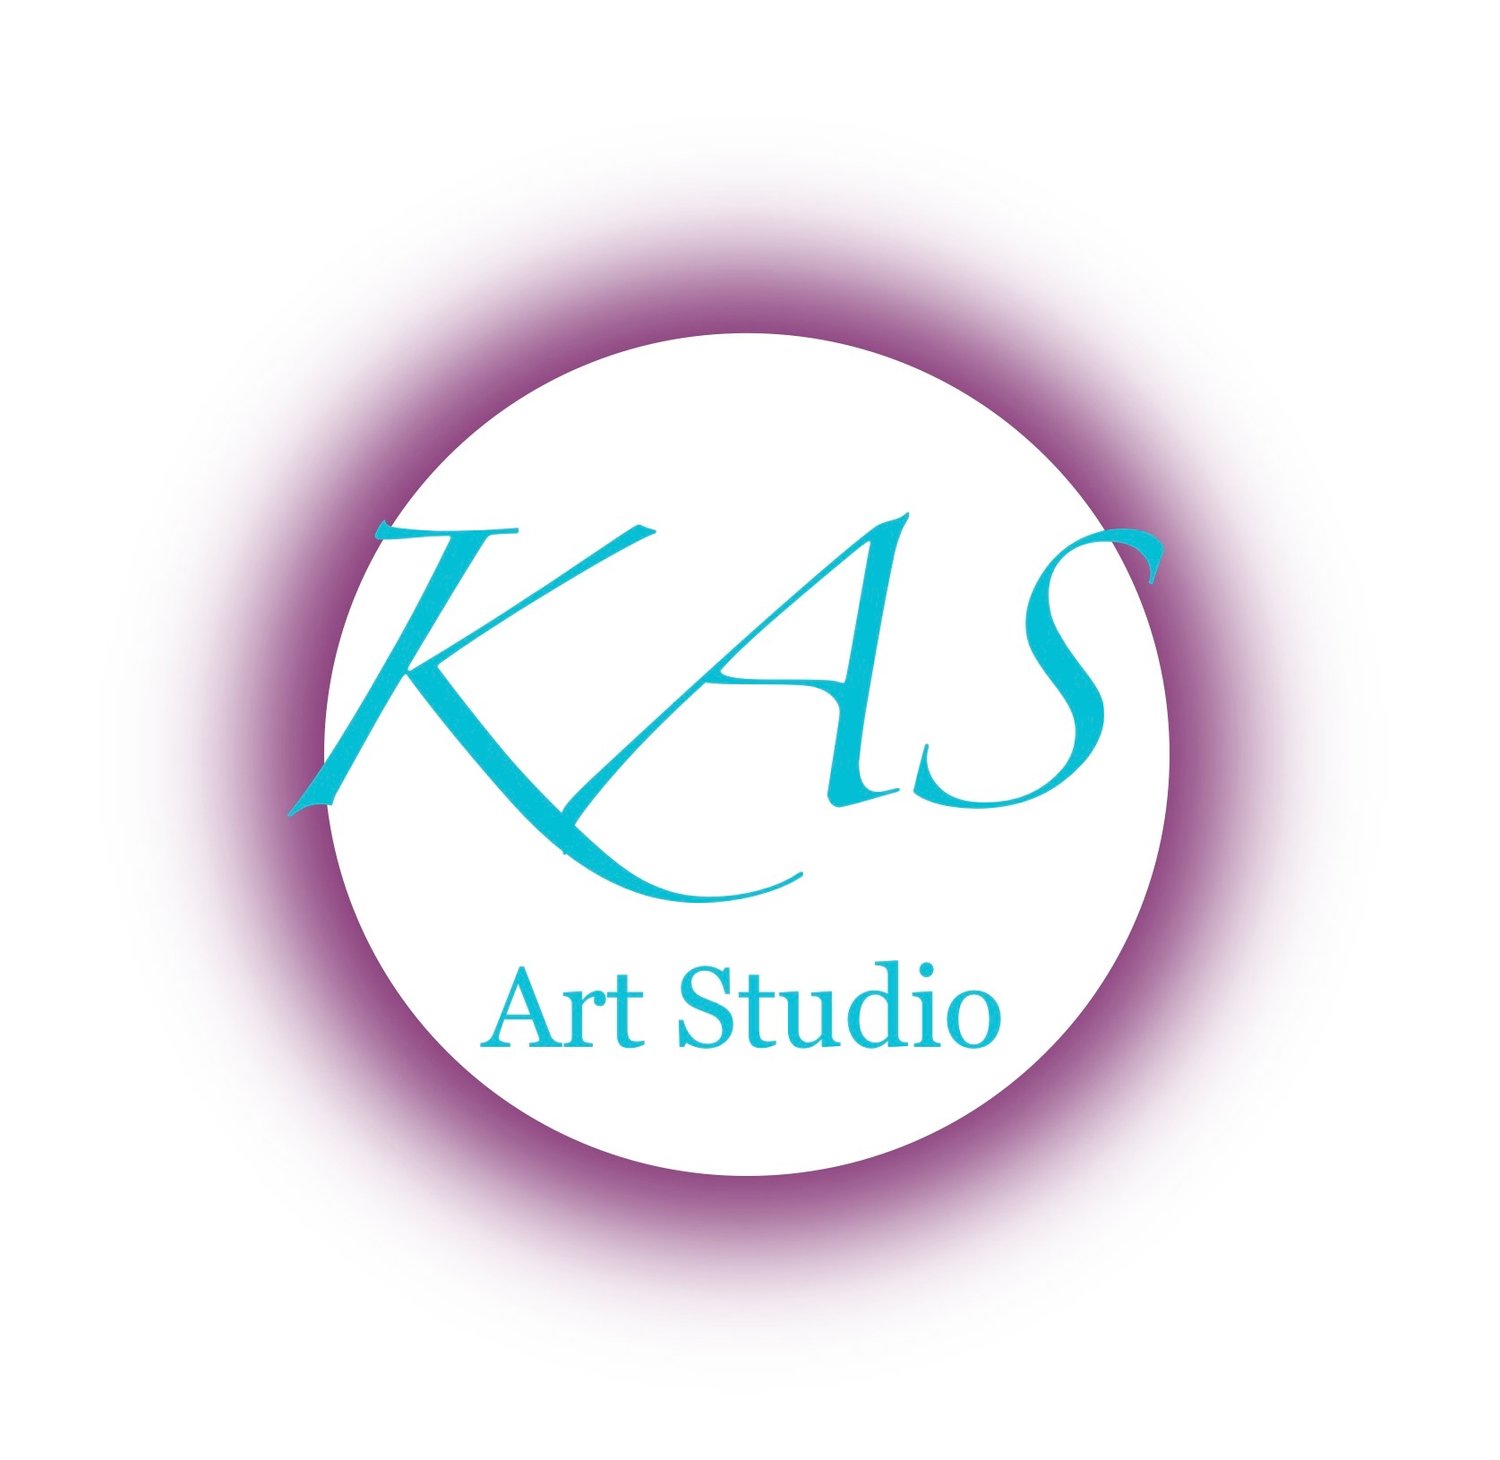 KAS Art Studio